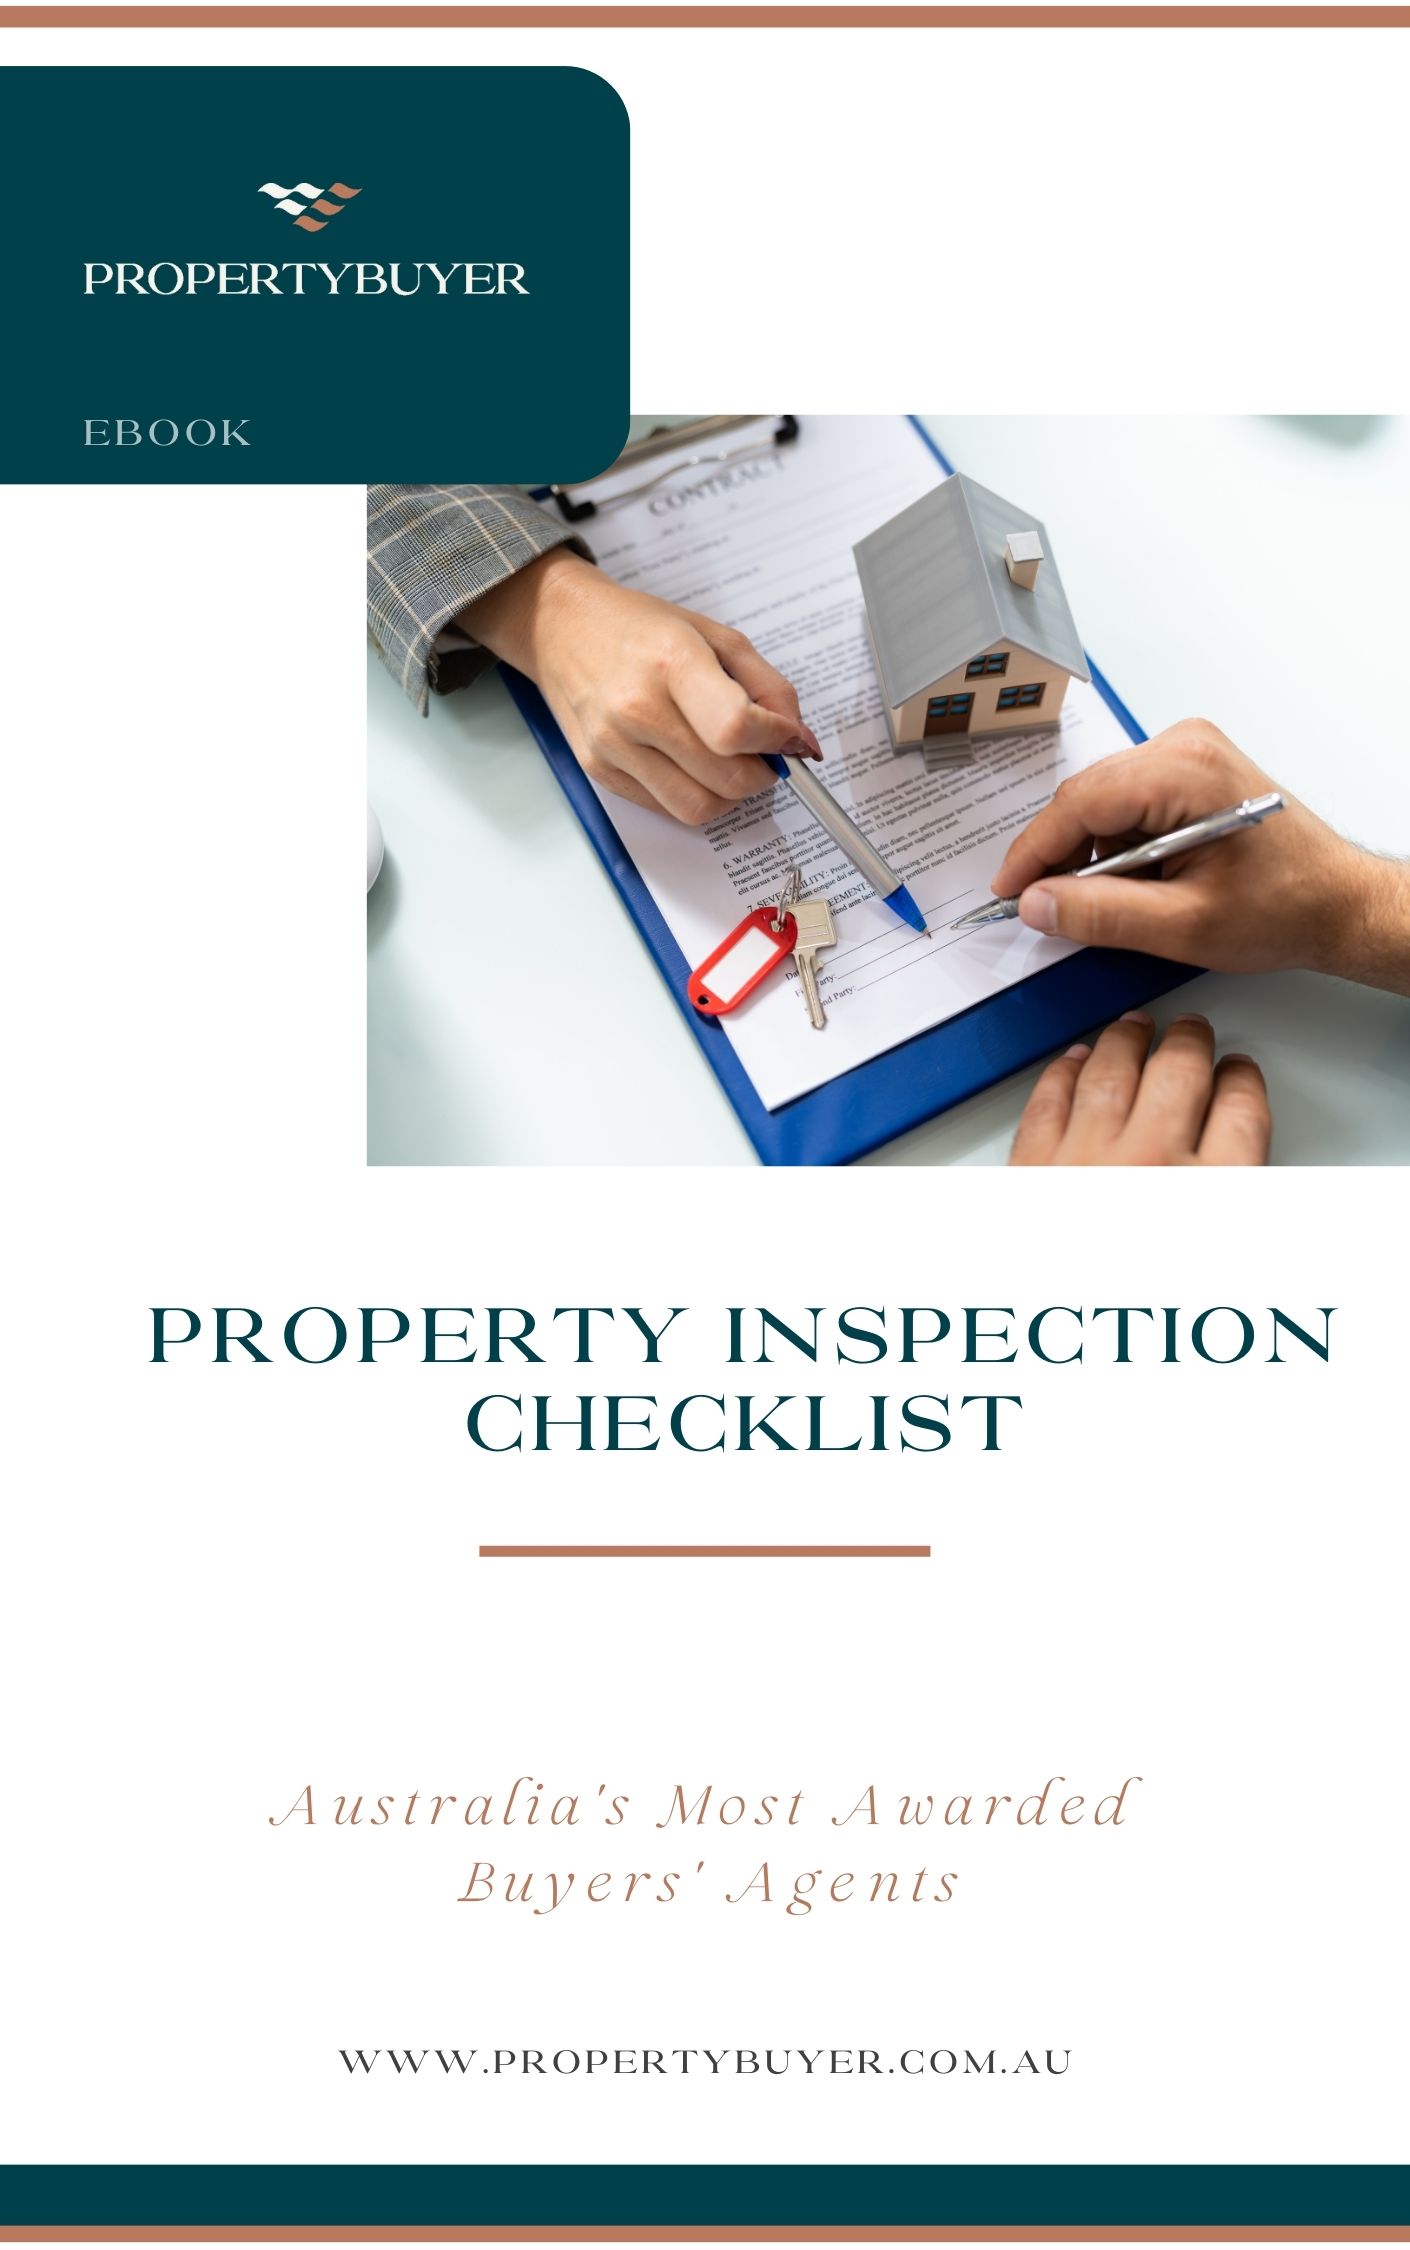 Property Inspection Checklist